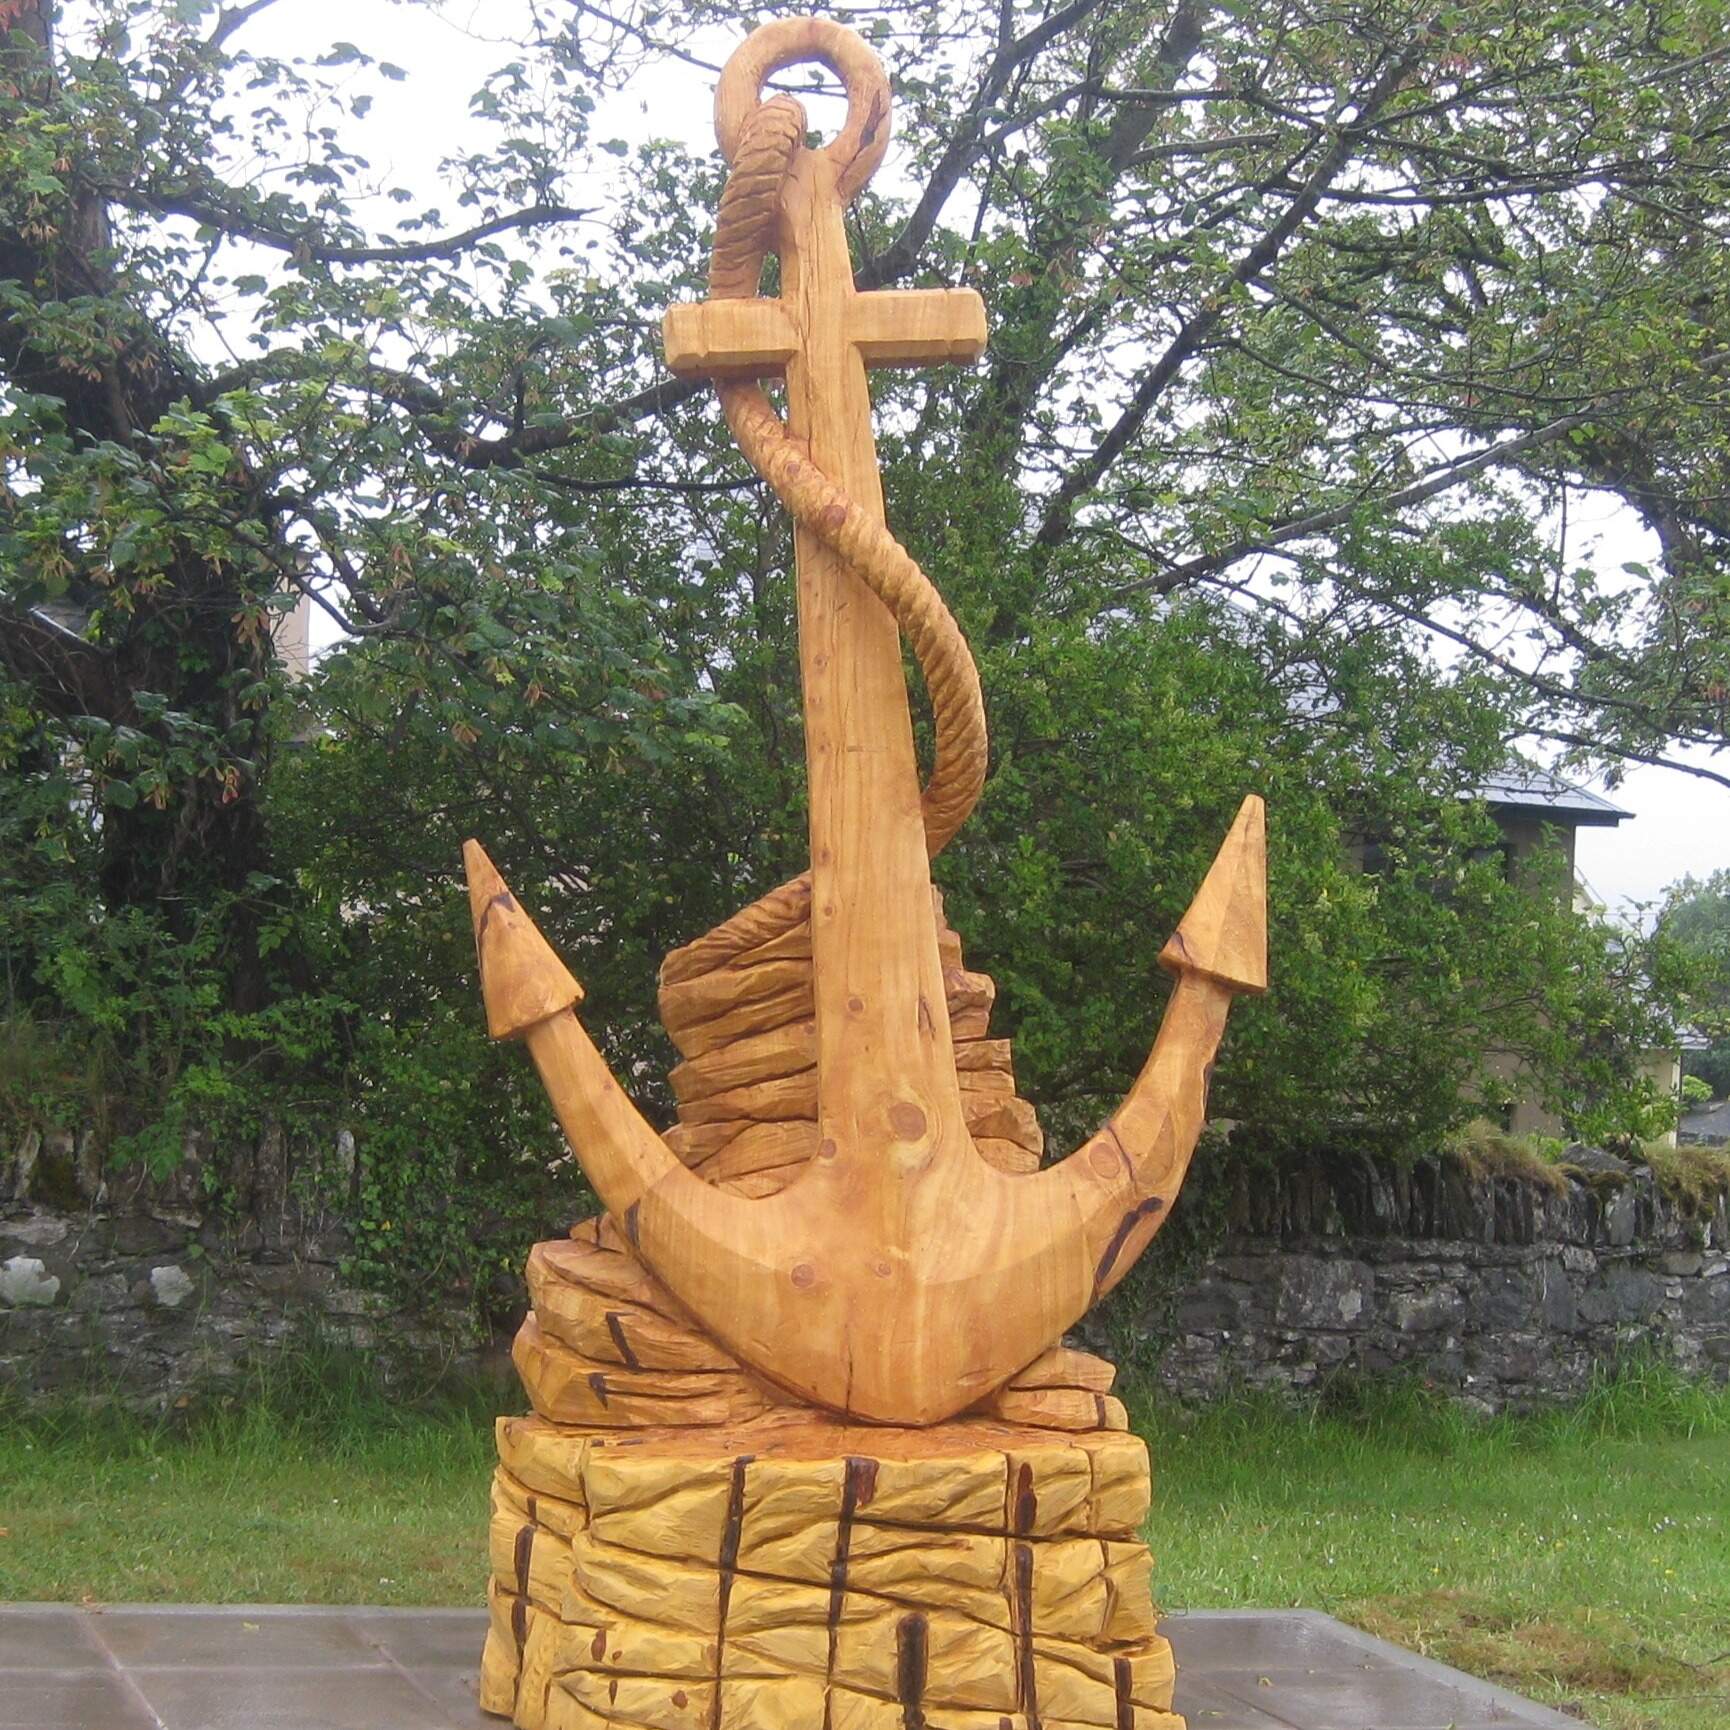 Anchor sculpture by An Fear Coillte